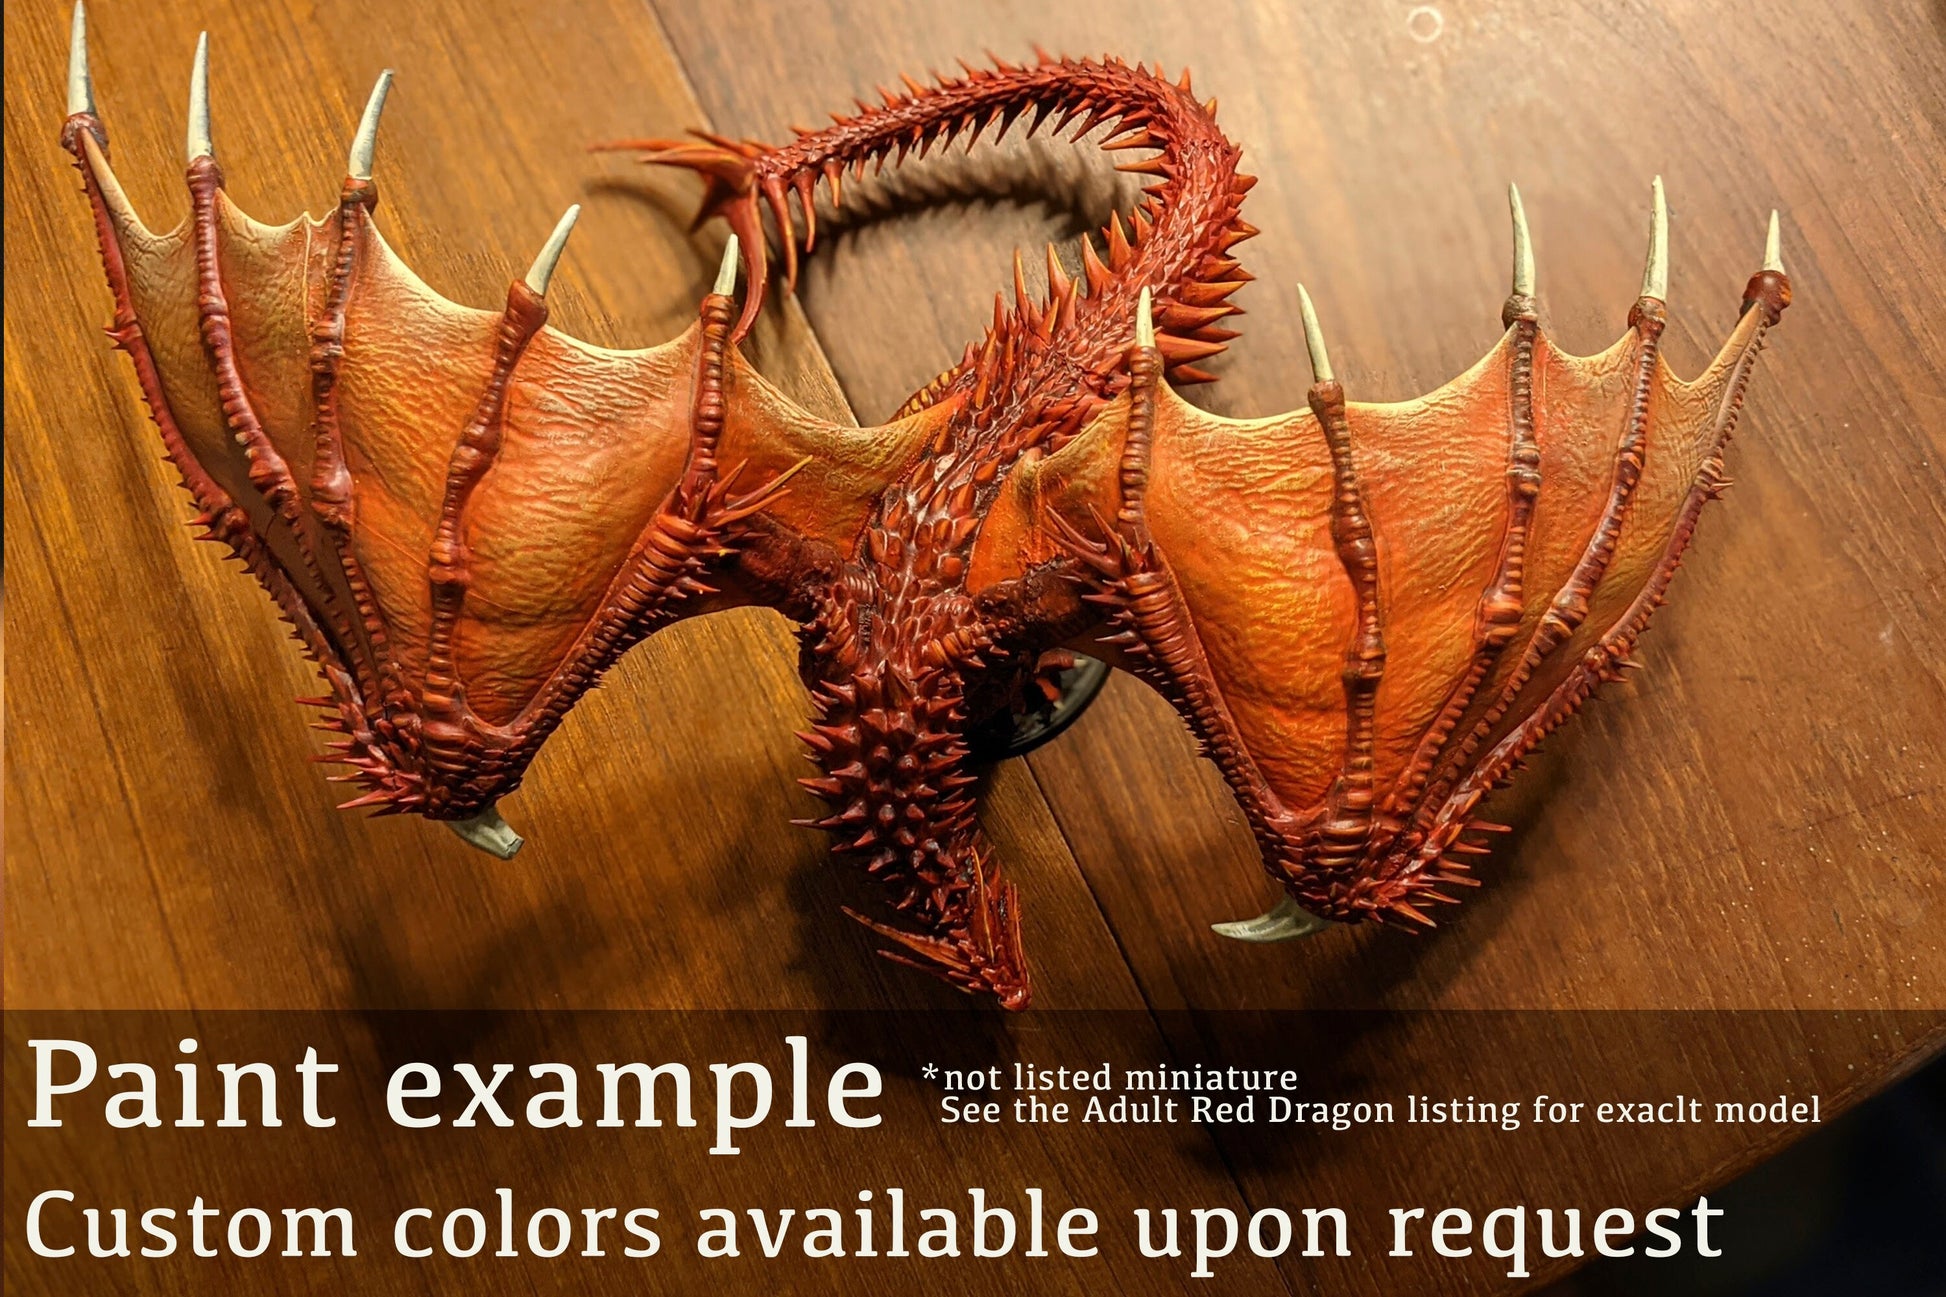 Velociraptor Bundle - 8 Mini Monster Mayhem Printed Miniatures | Dungeons & Dragons | Pathfinder | Tabletop